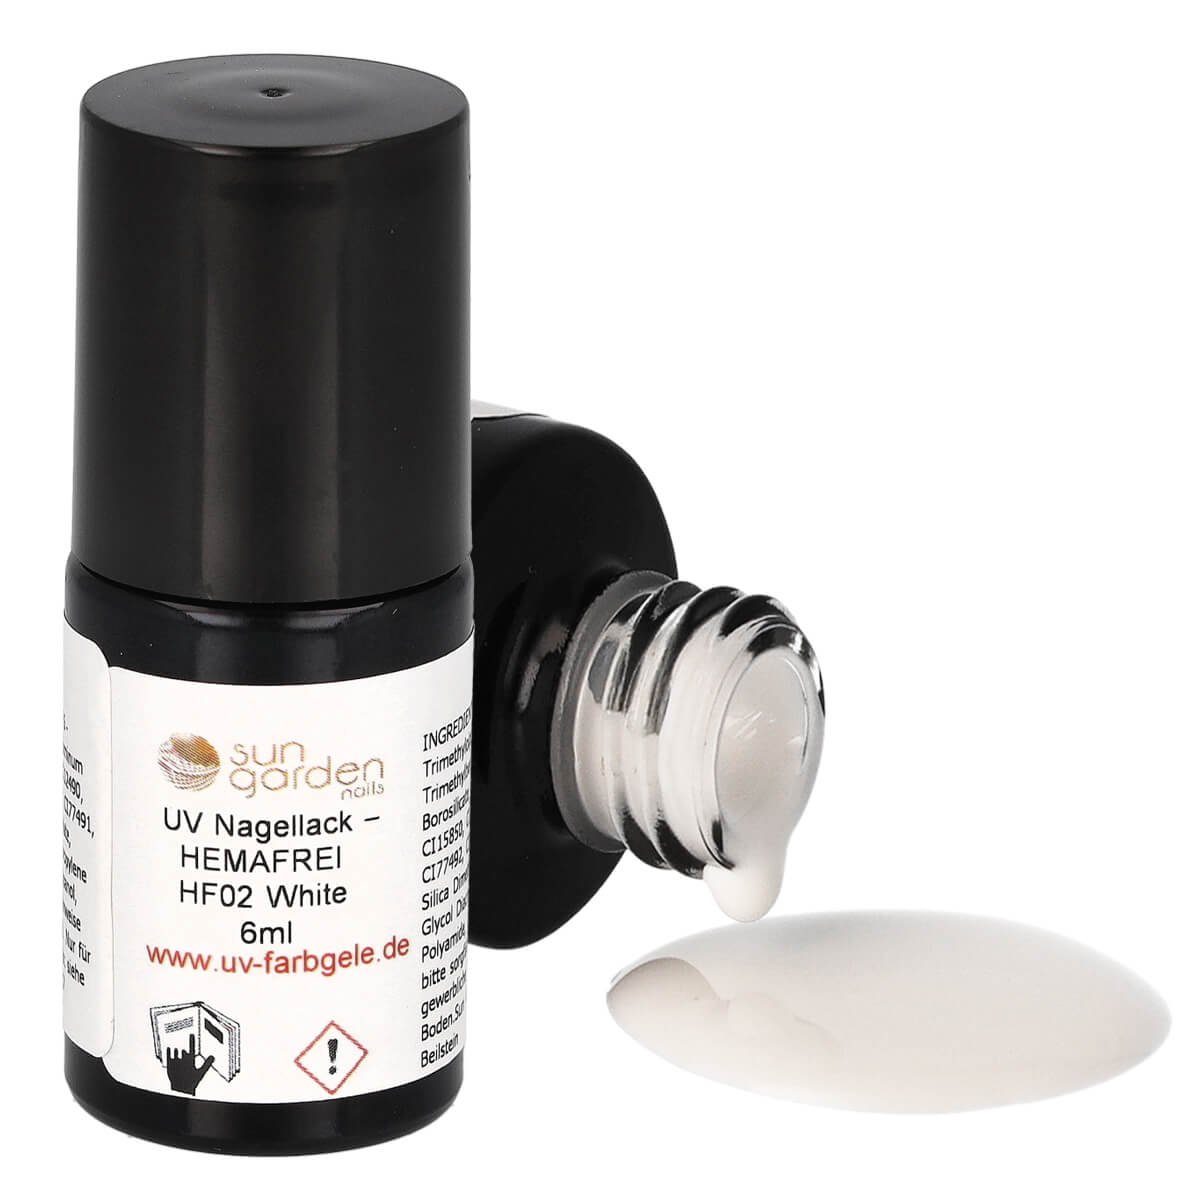 Sun Garden Nails Nagellack HF02 White - UV Nagellack 6ml – HEMAFREI